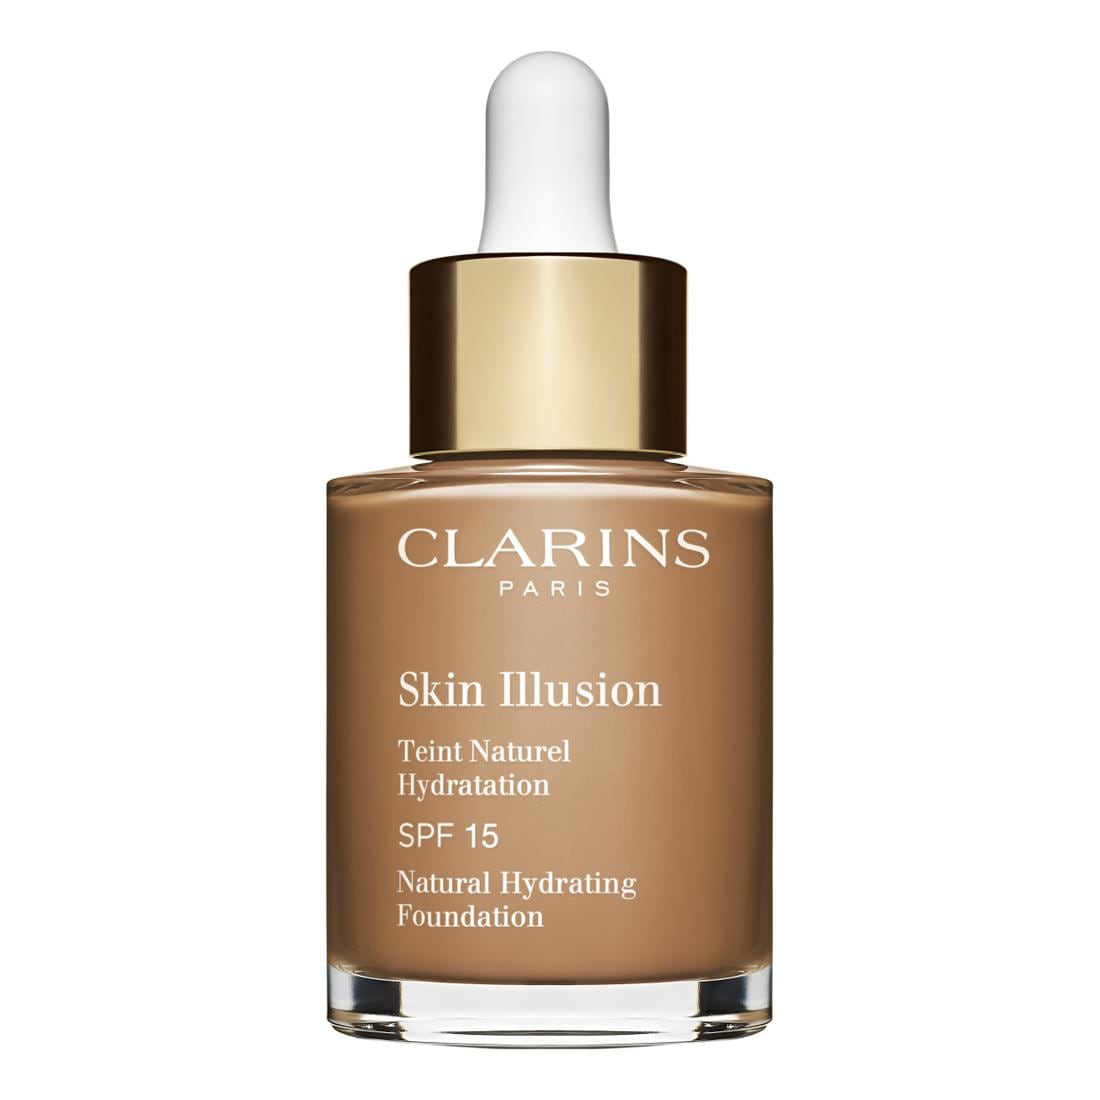 Clarins Skin Illusion SPF15,No. 113 - Chestnut, No. 113 - Chestnut